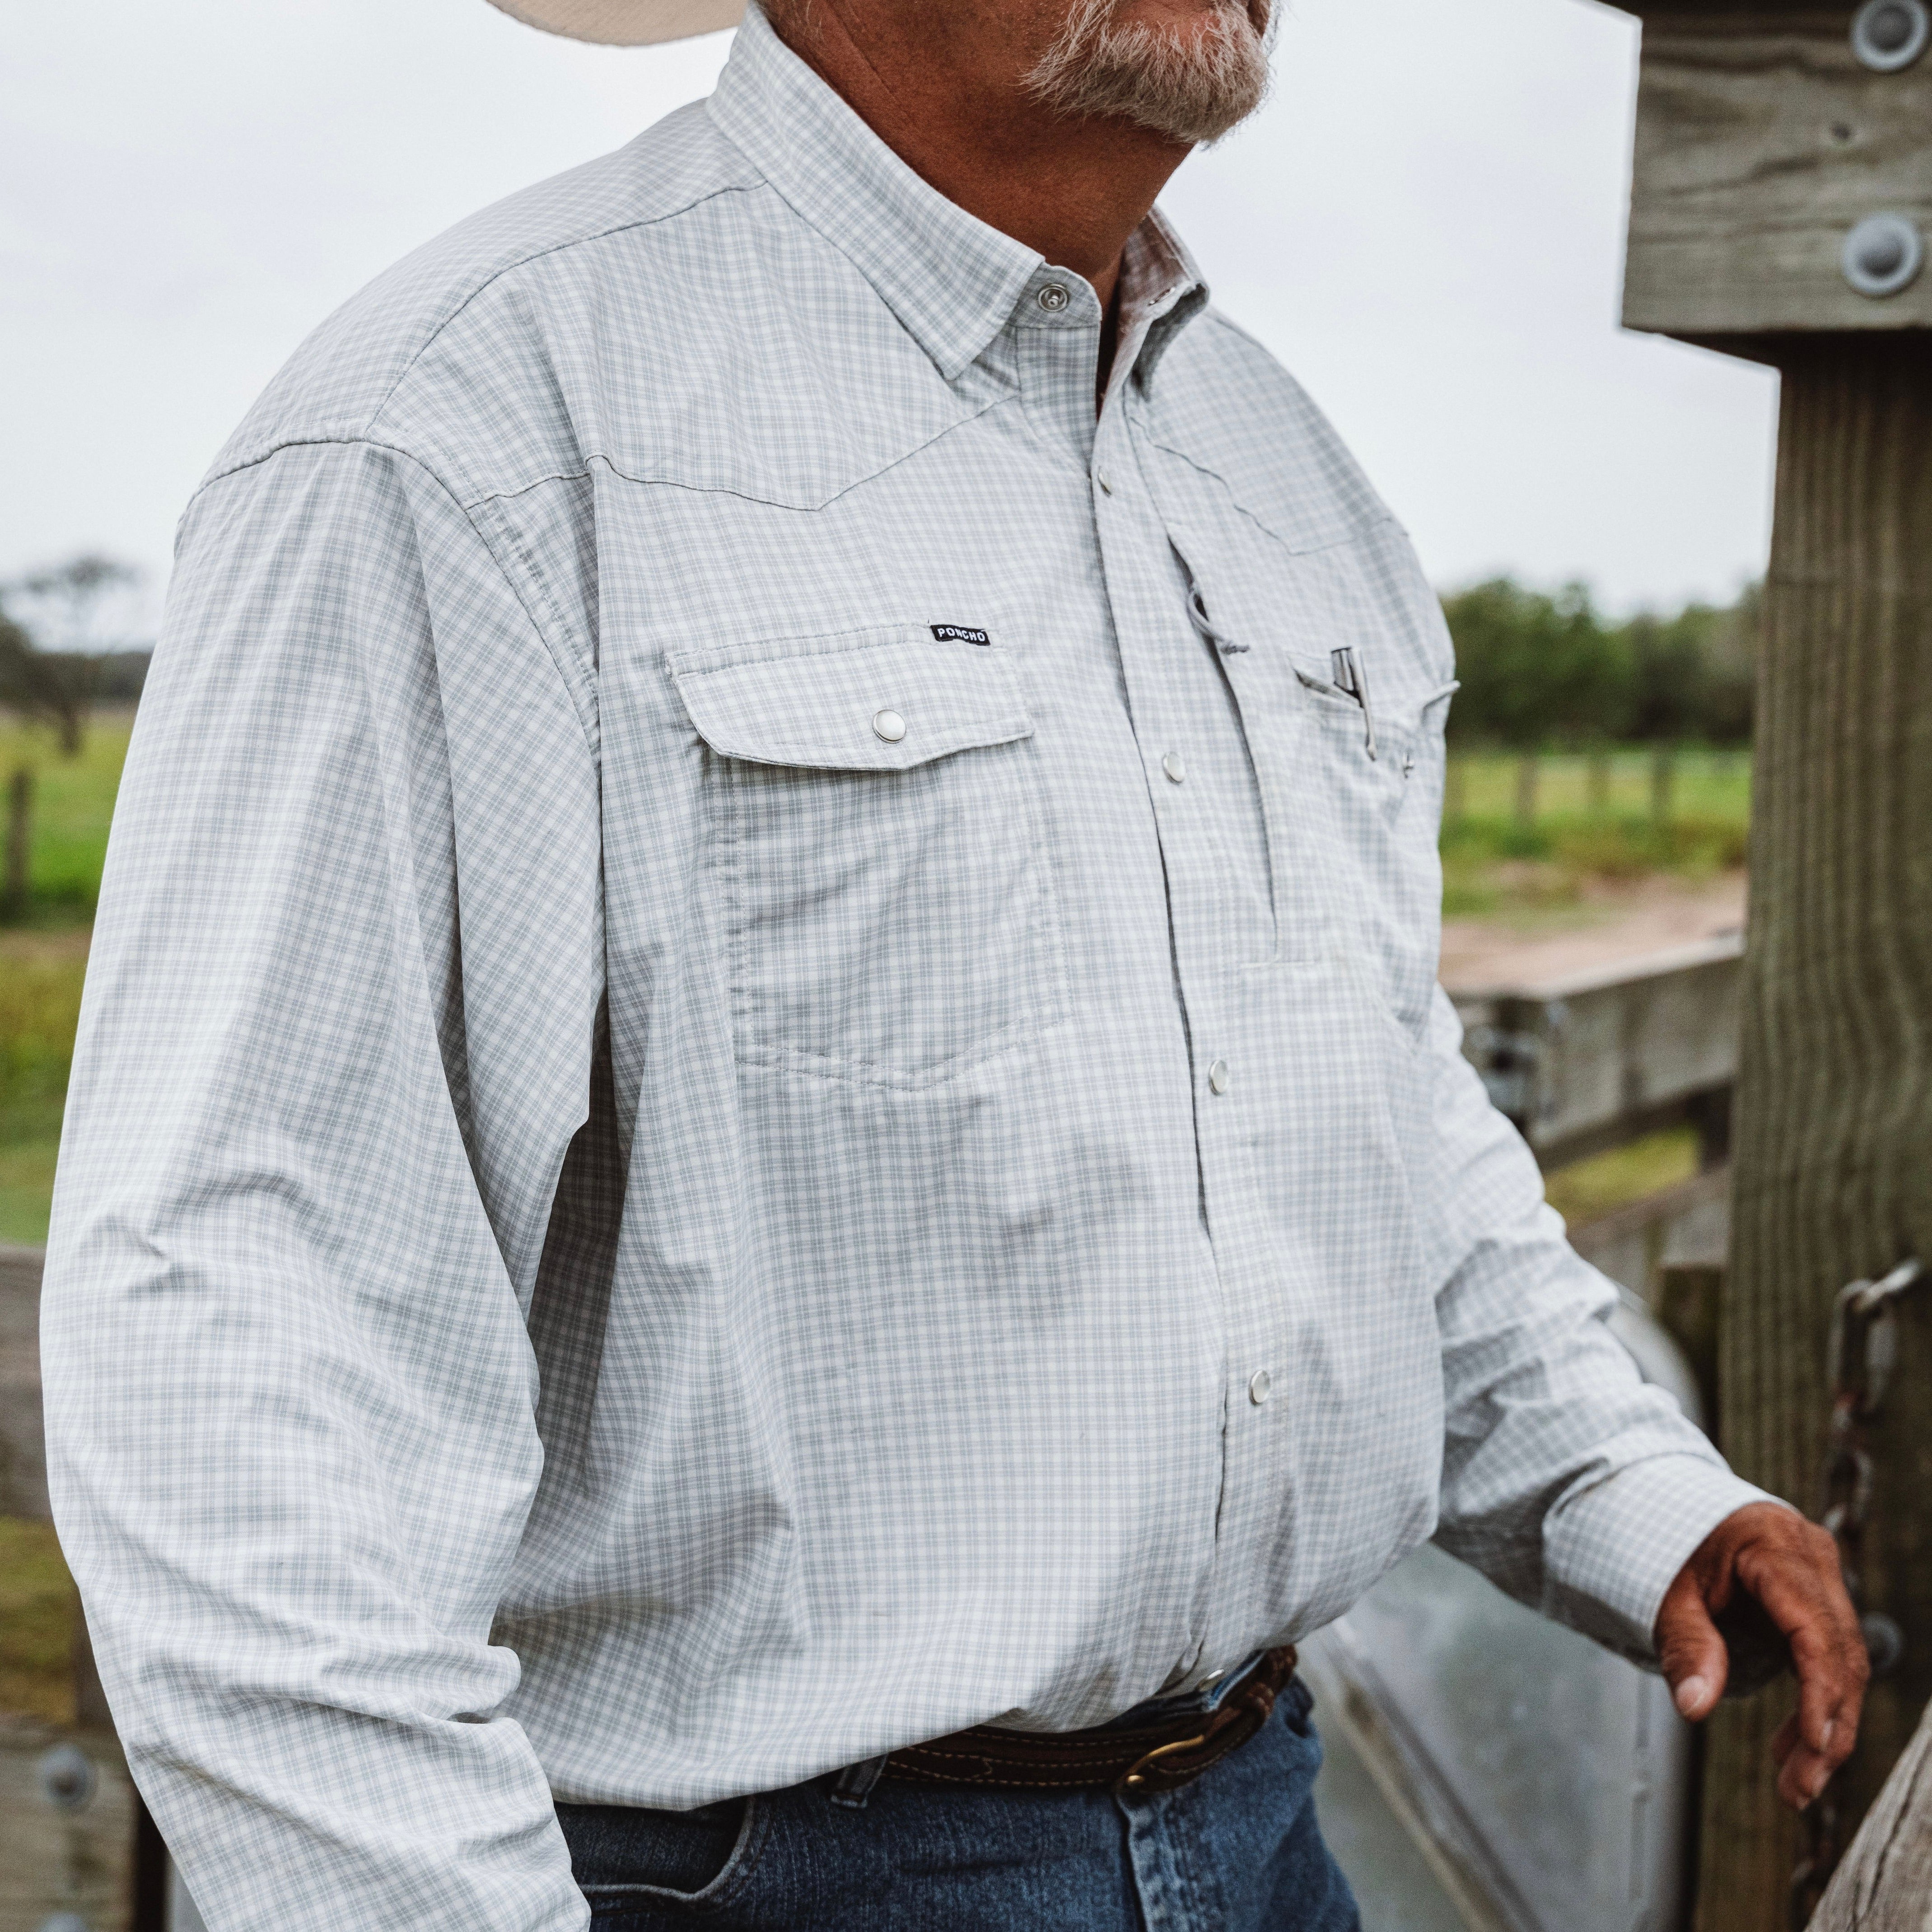 Man stands wearing a checkered button down western shirt